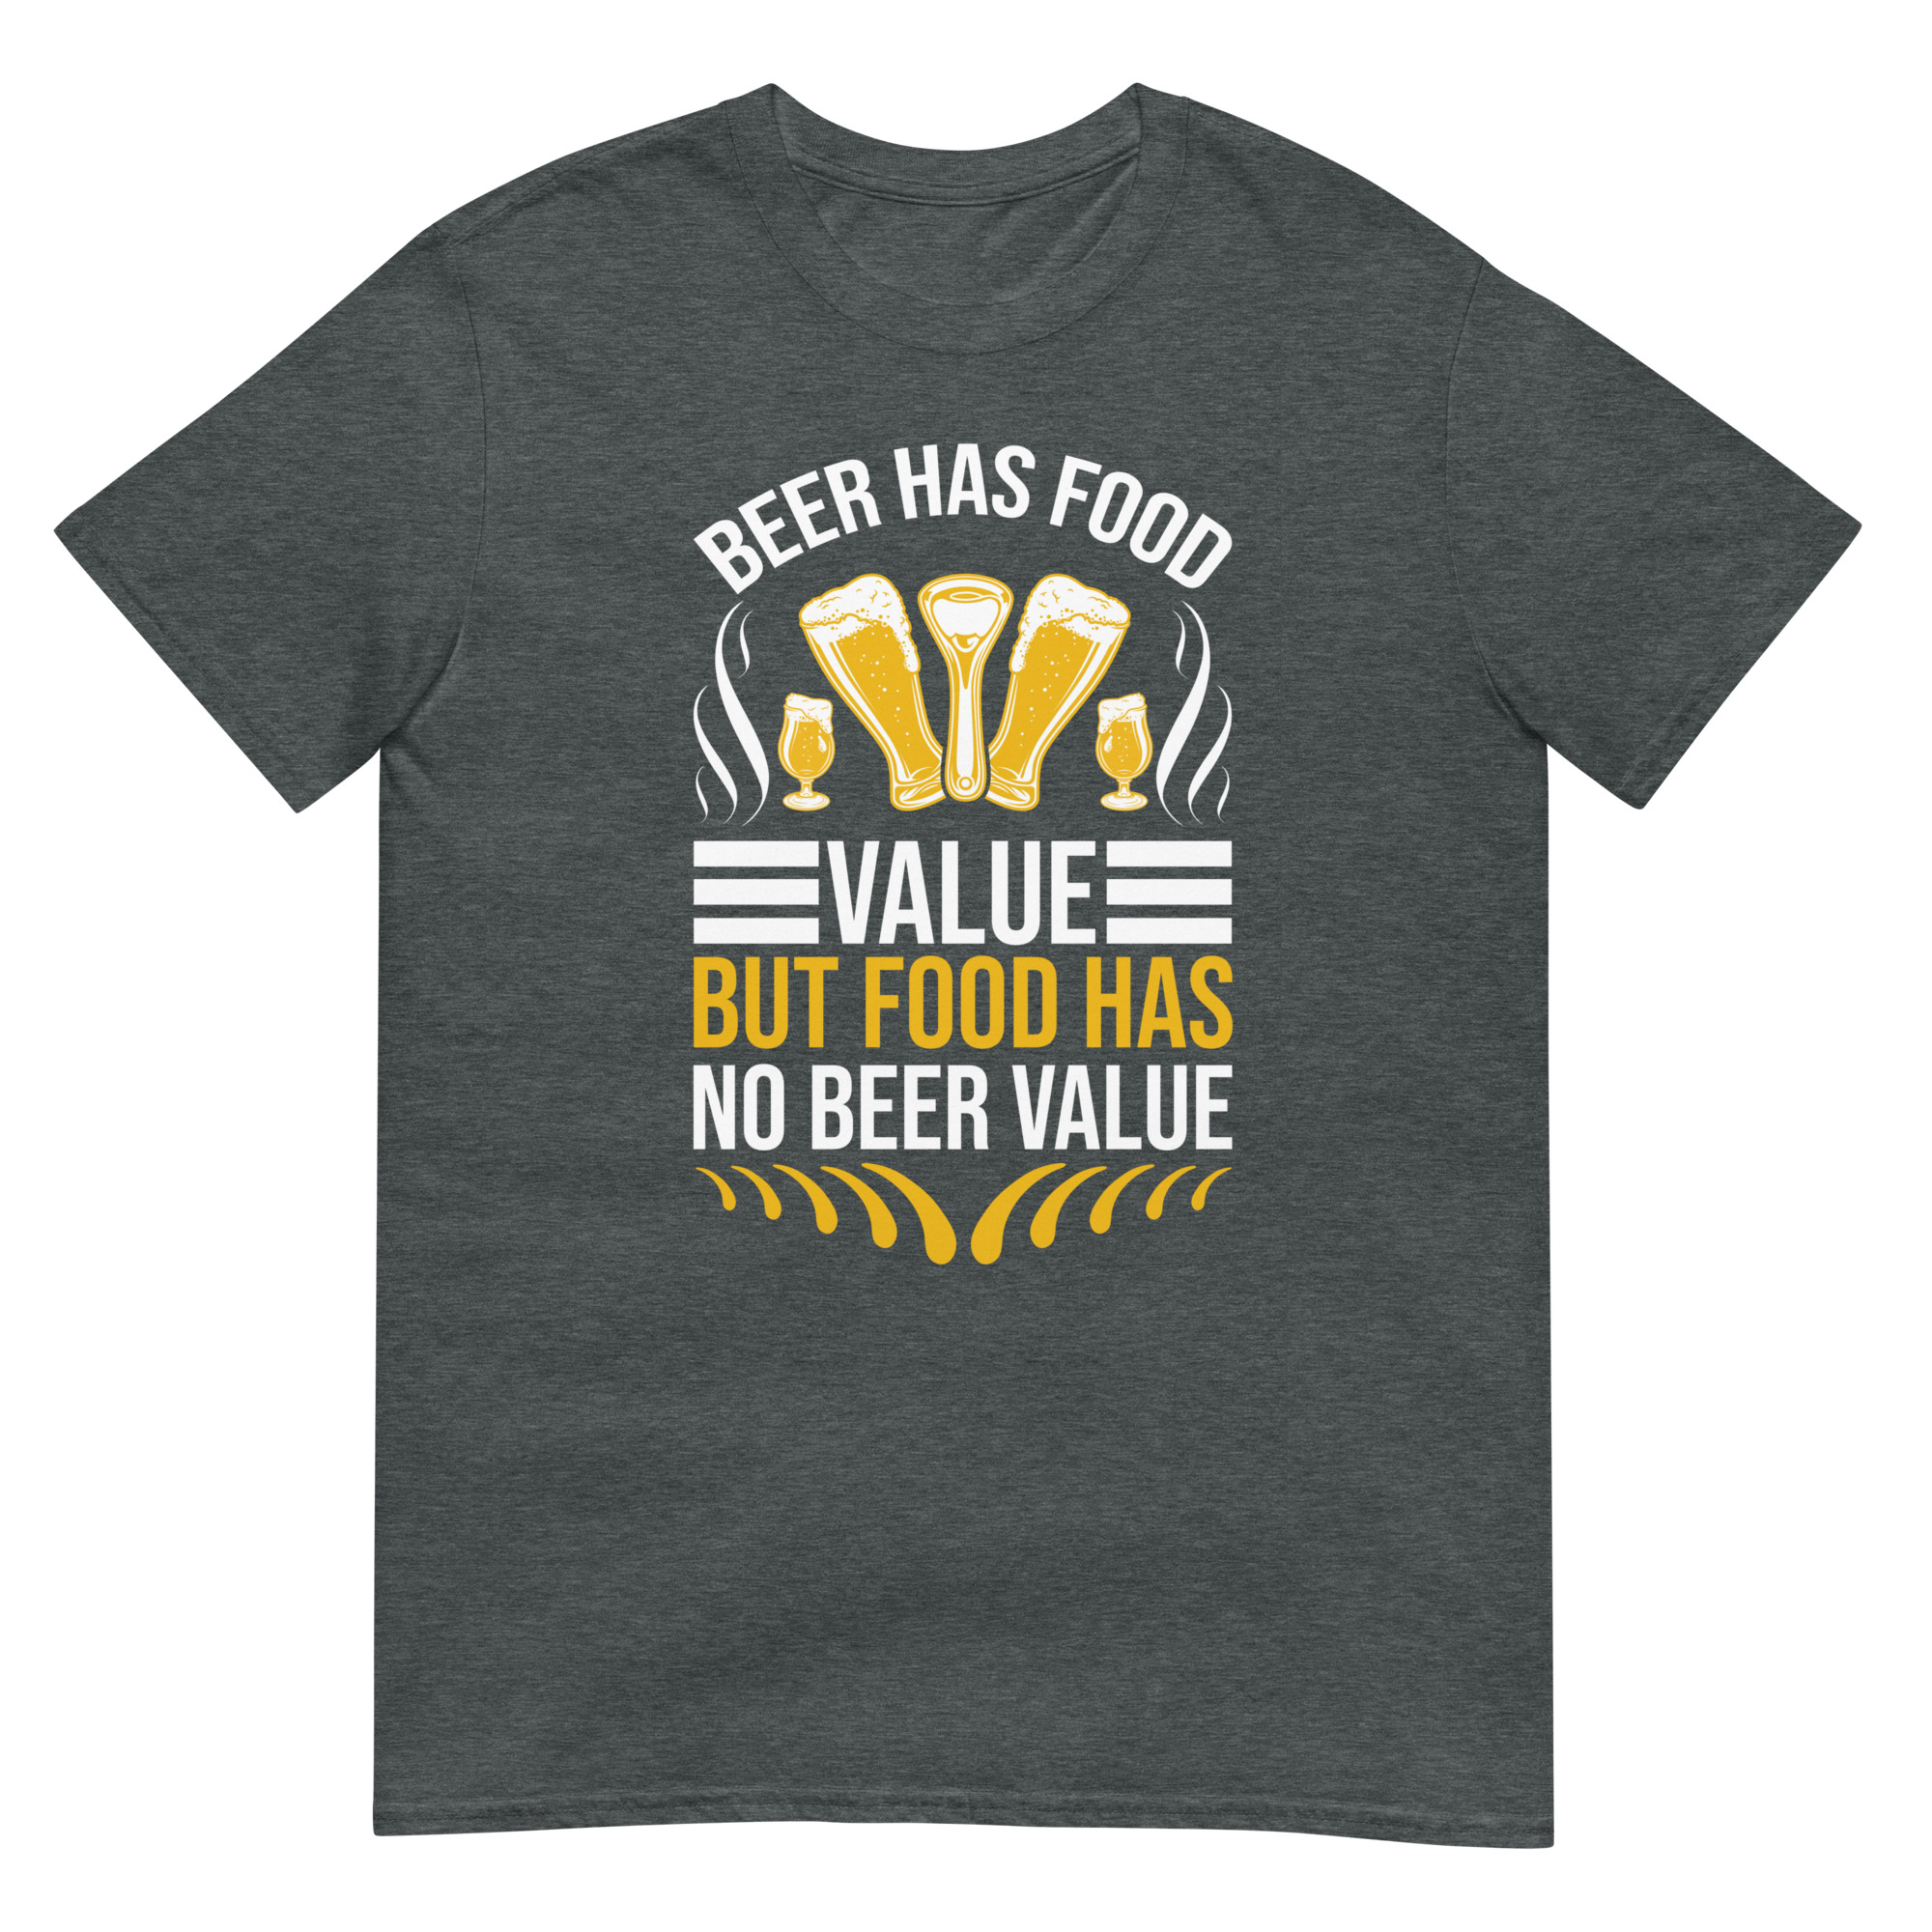 Beer Has Food Value But Food Has No Beer Value - Unisex Beer T-Shirt